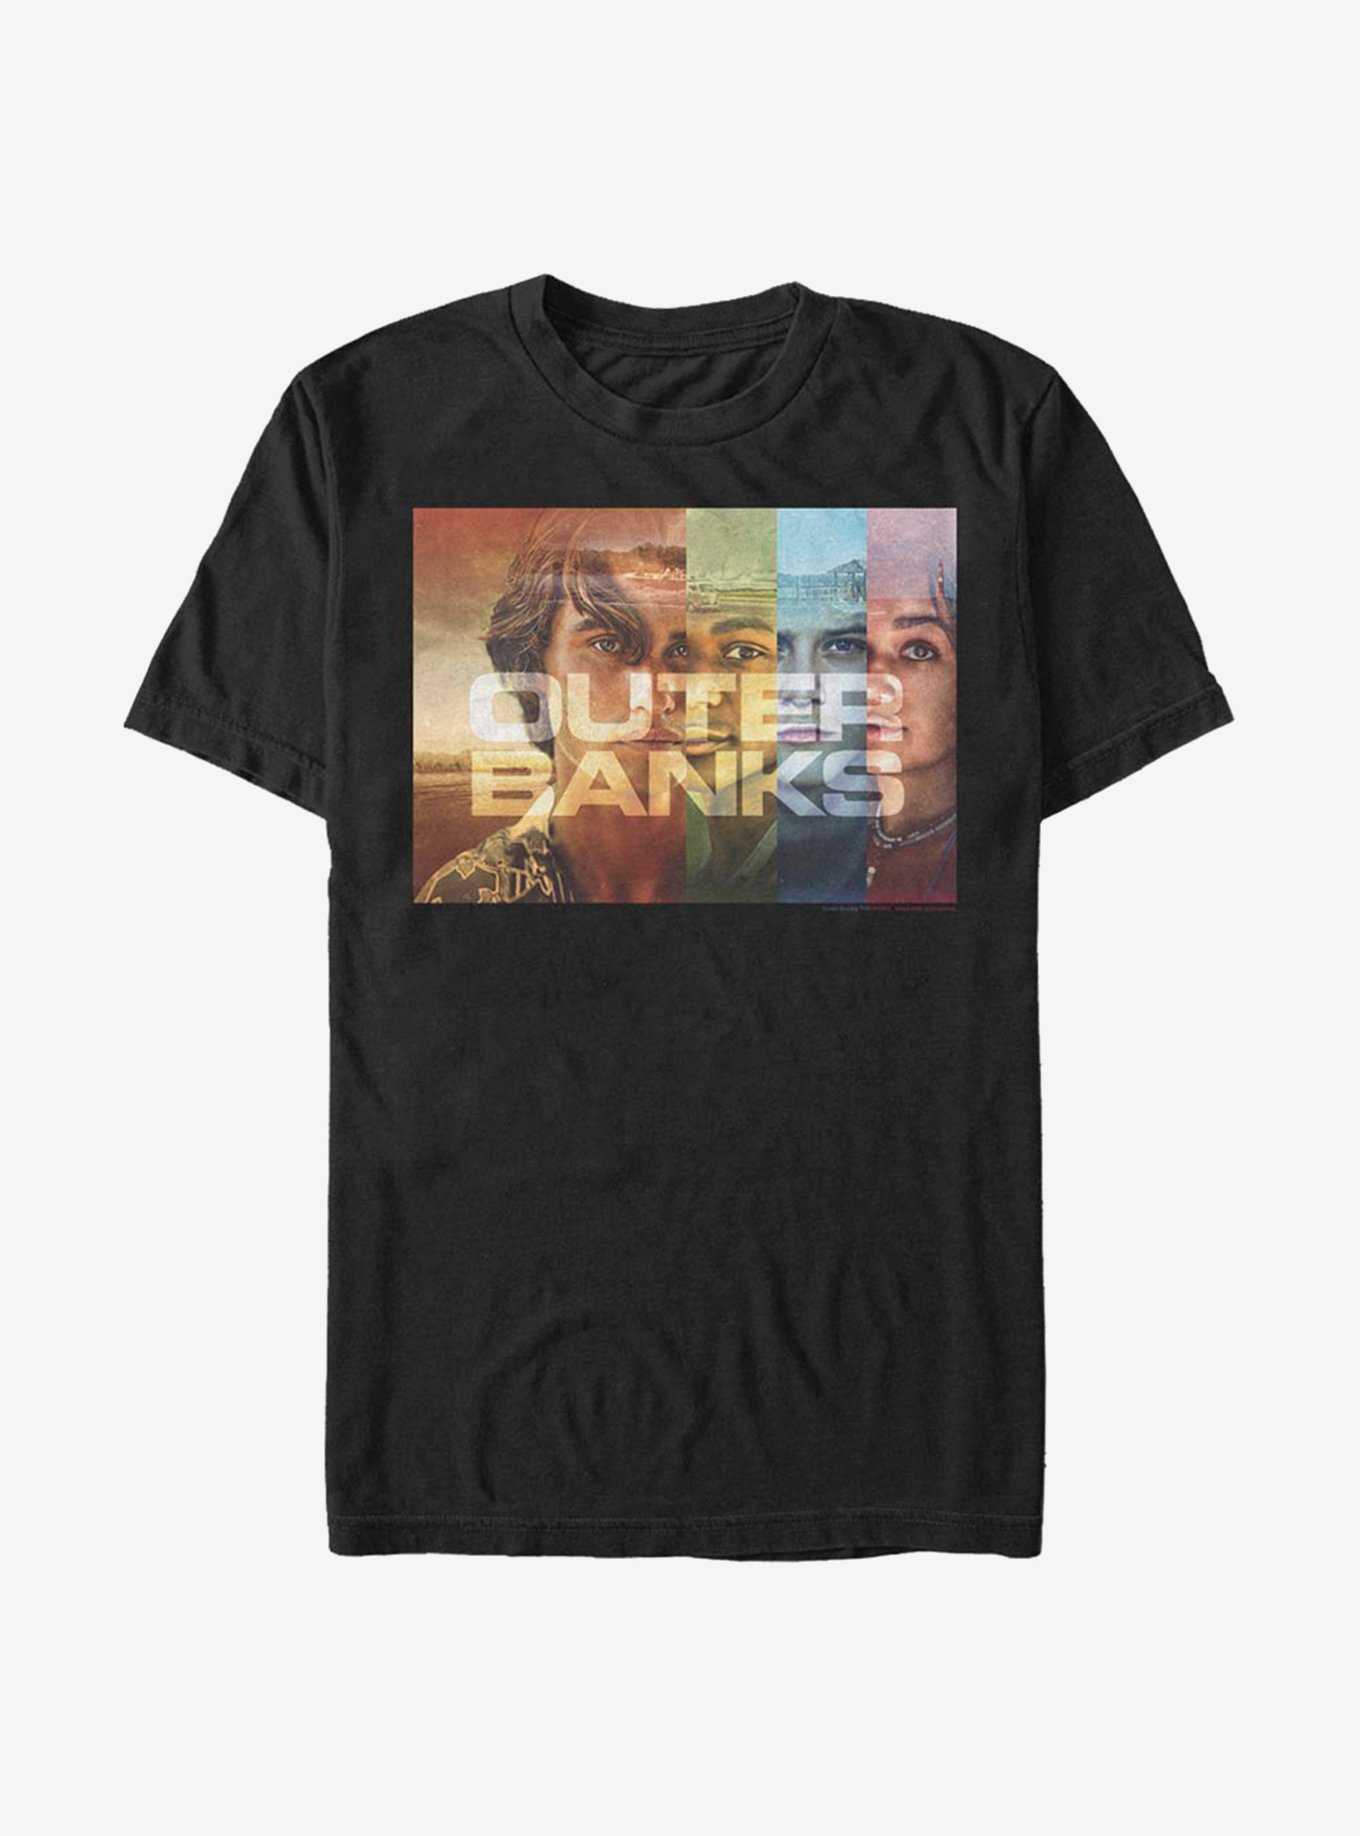 Outer Banks Poster T-Shirt, , hi-res